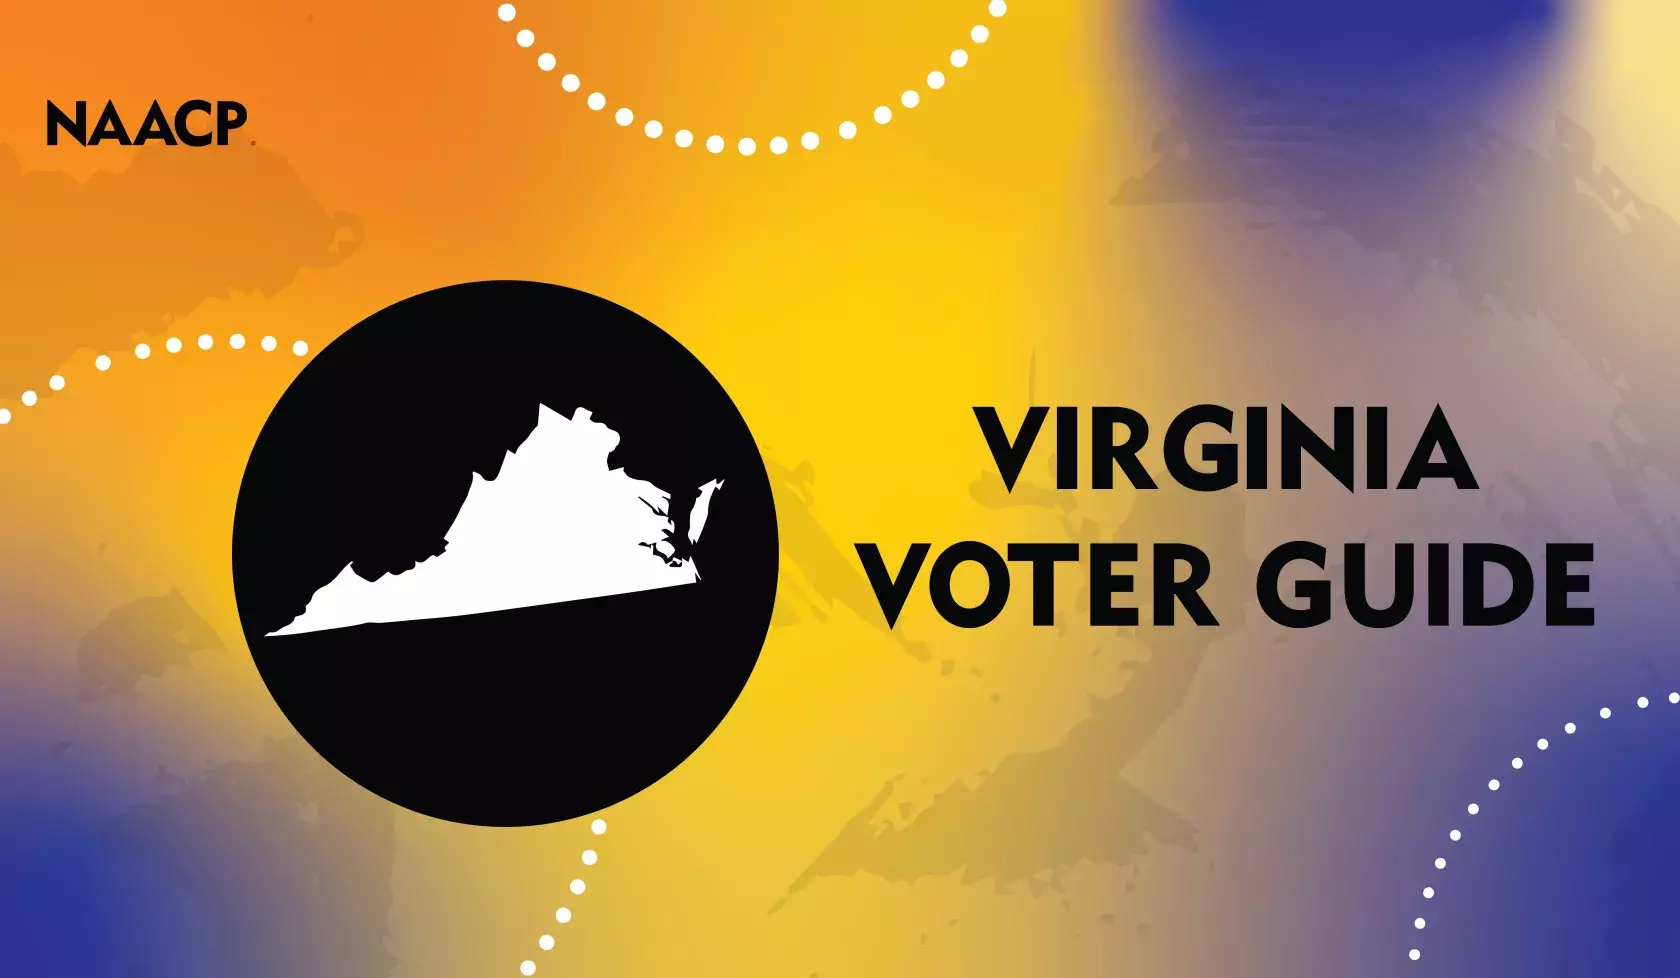 Virginia Voter Guide Hero - NAACP